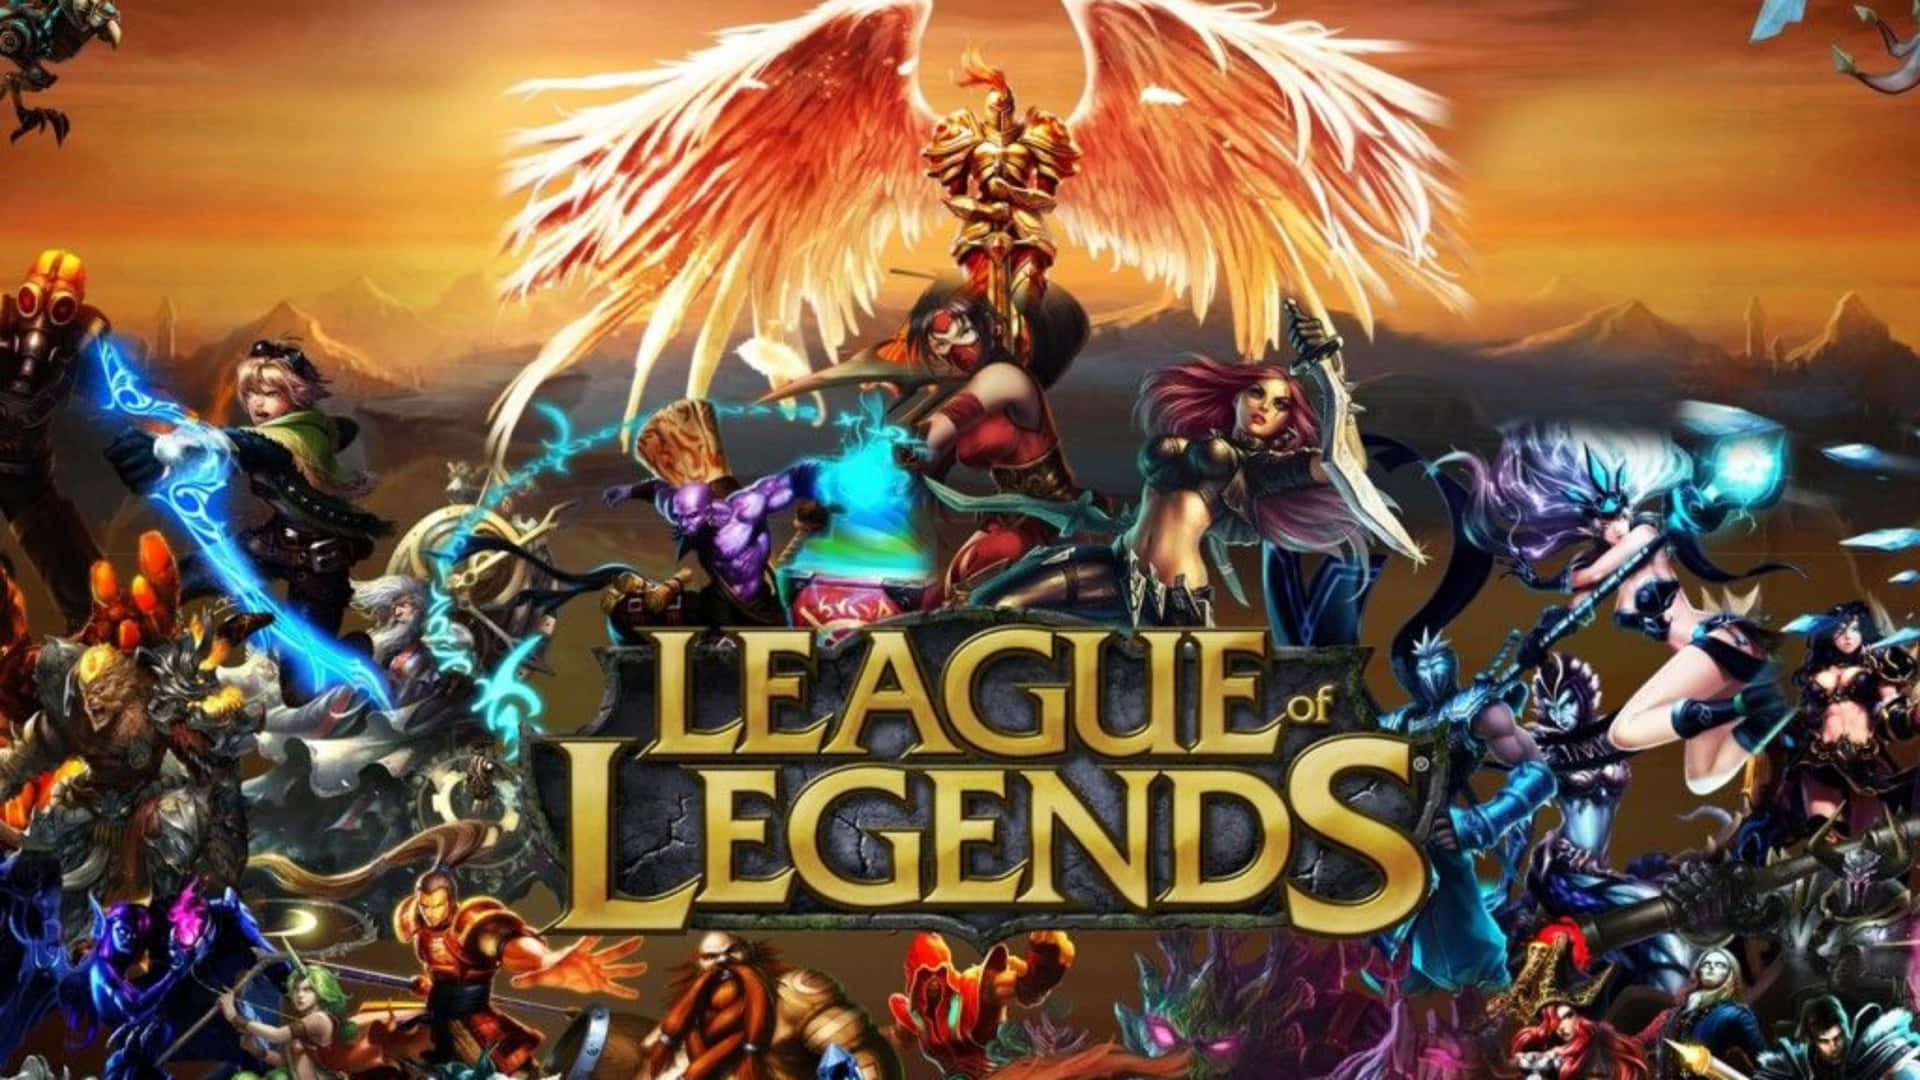 Upplevepiska Strider Med Imponerande 4k-bilder I League Of Legends!